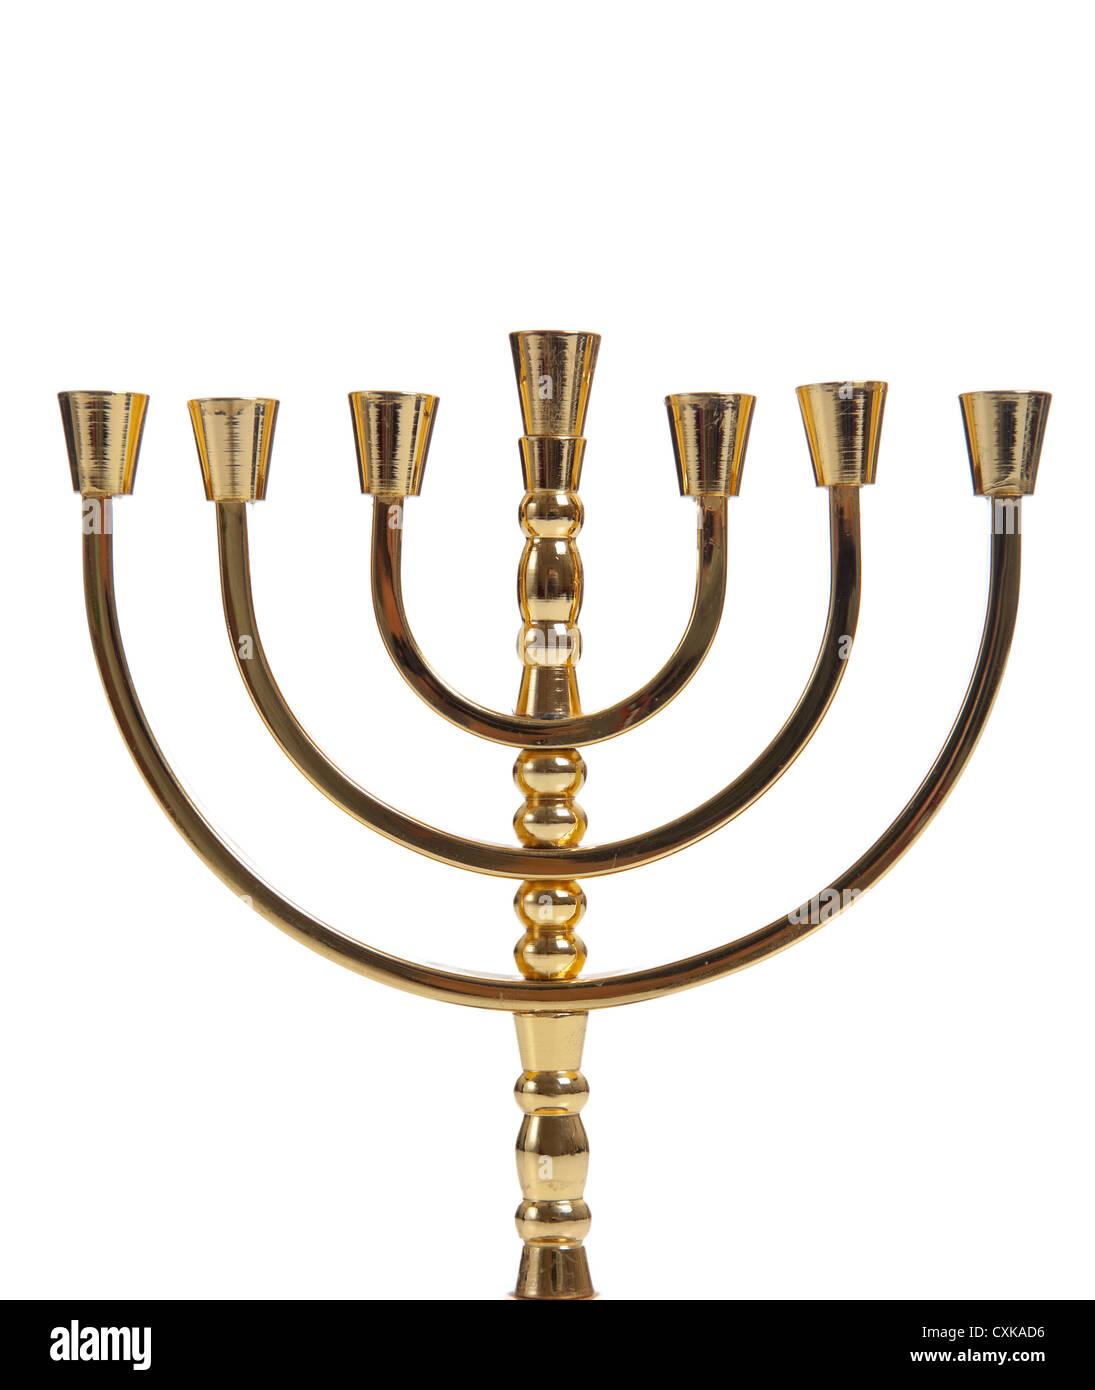 A gold Jewish menorah on a white background Stock Photo